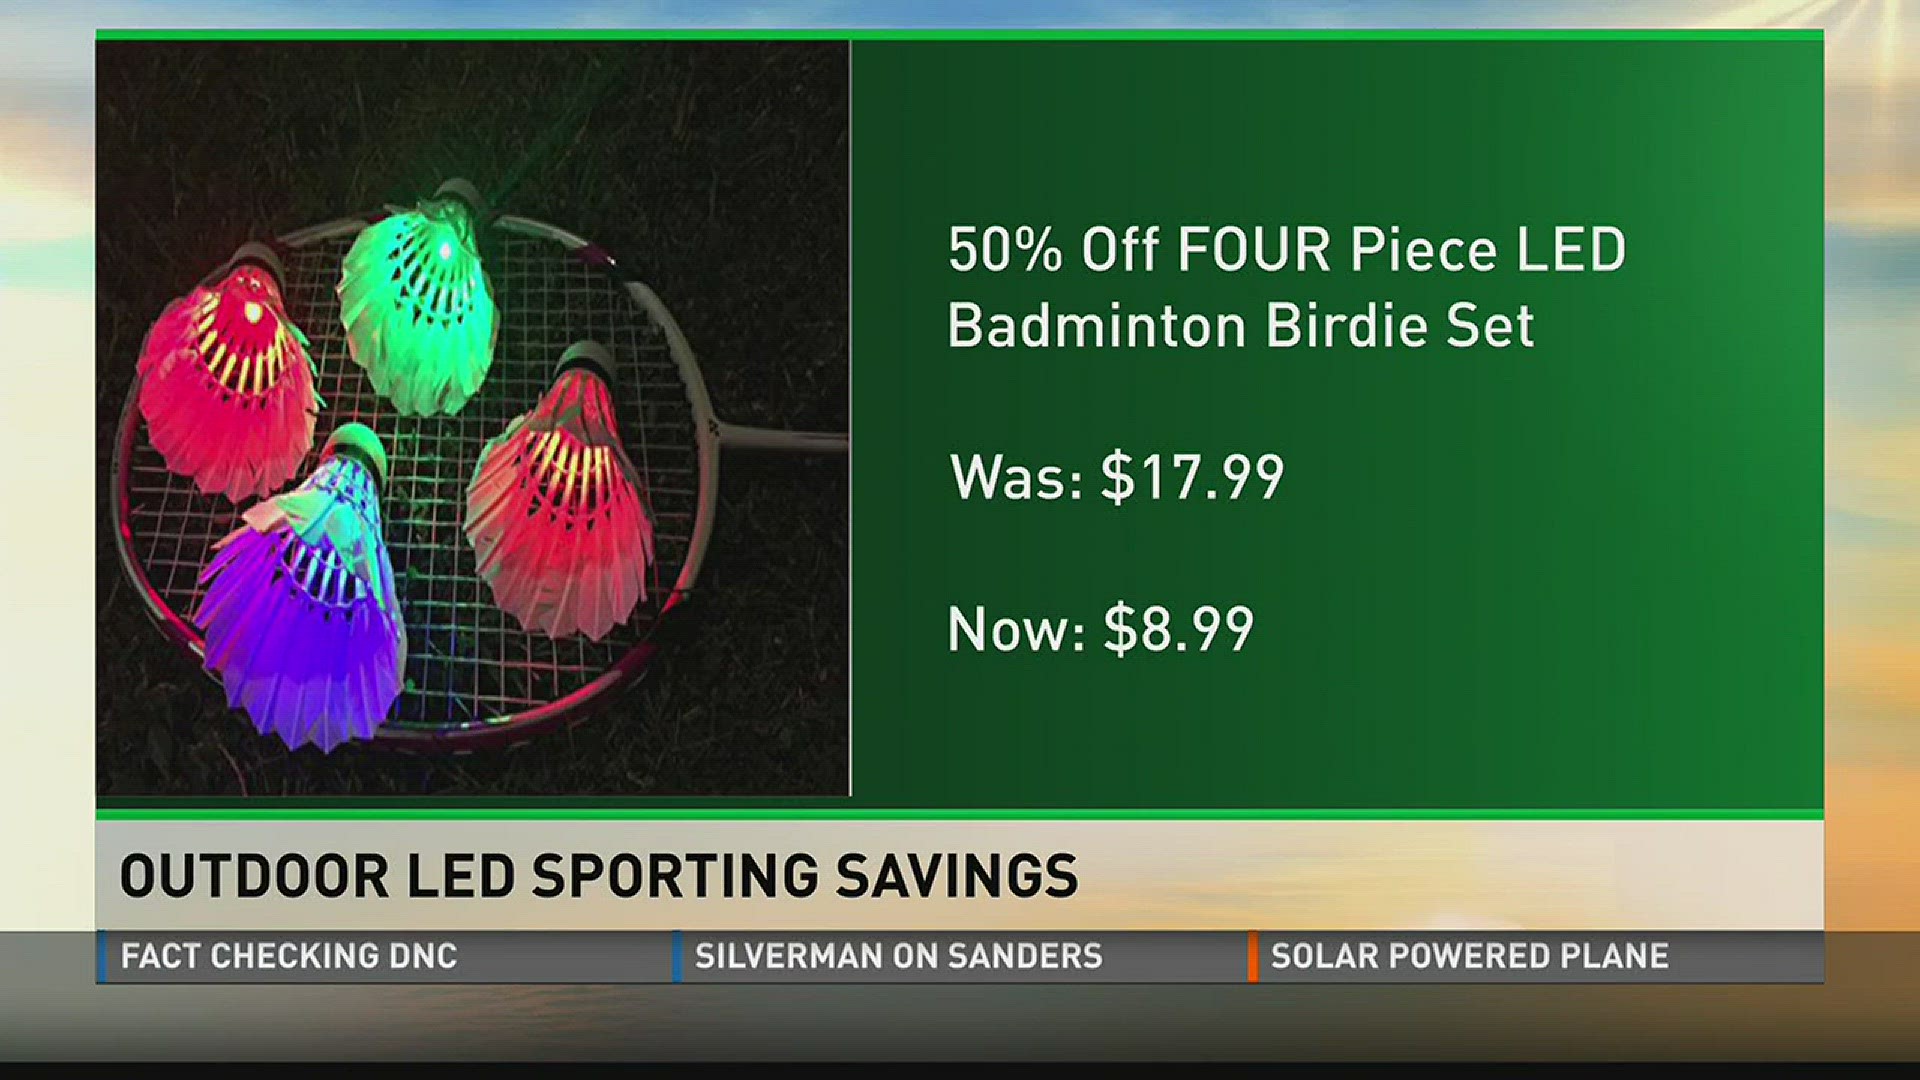 Money man Matt Granite shows how to save on a LED badminton birdie set.